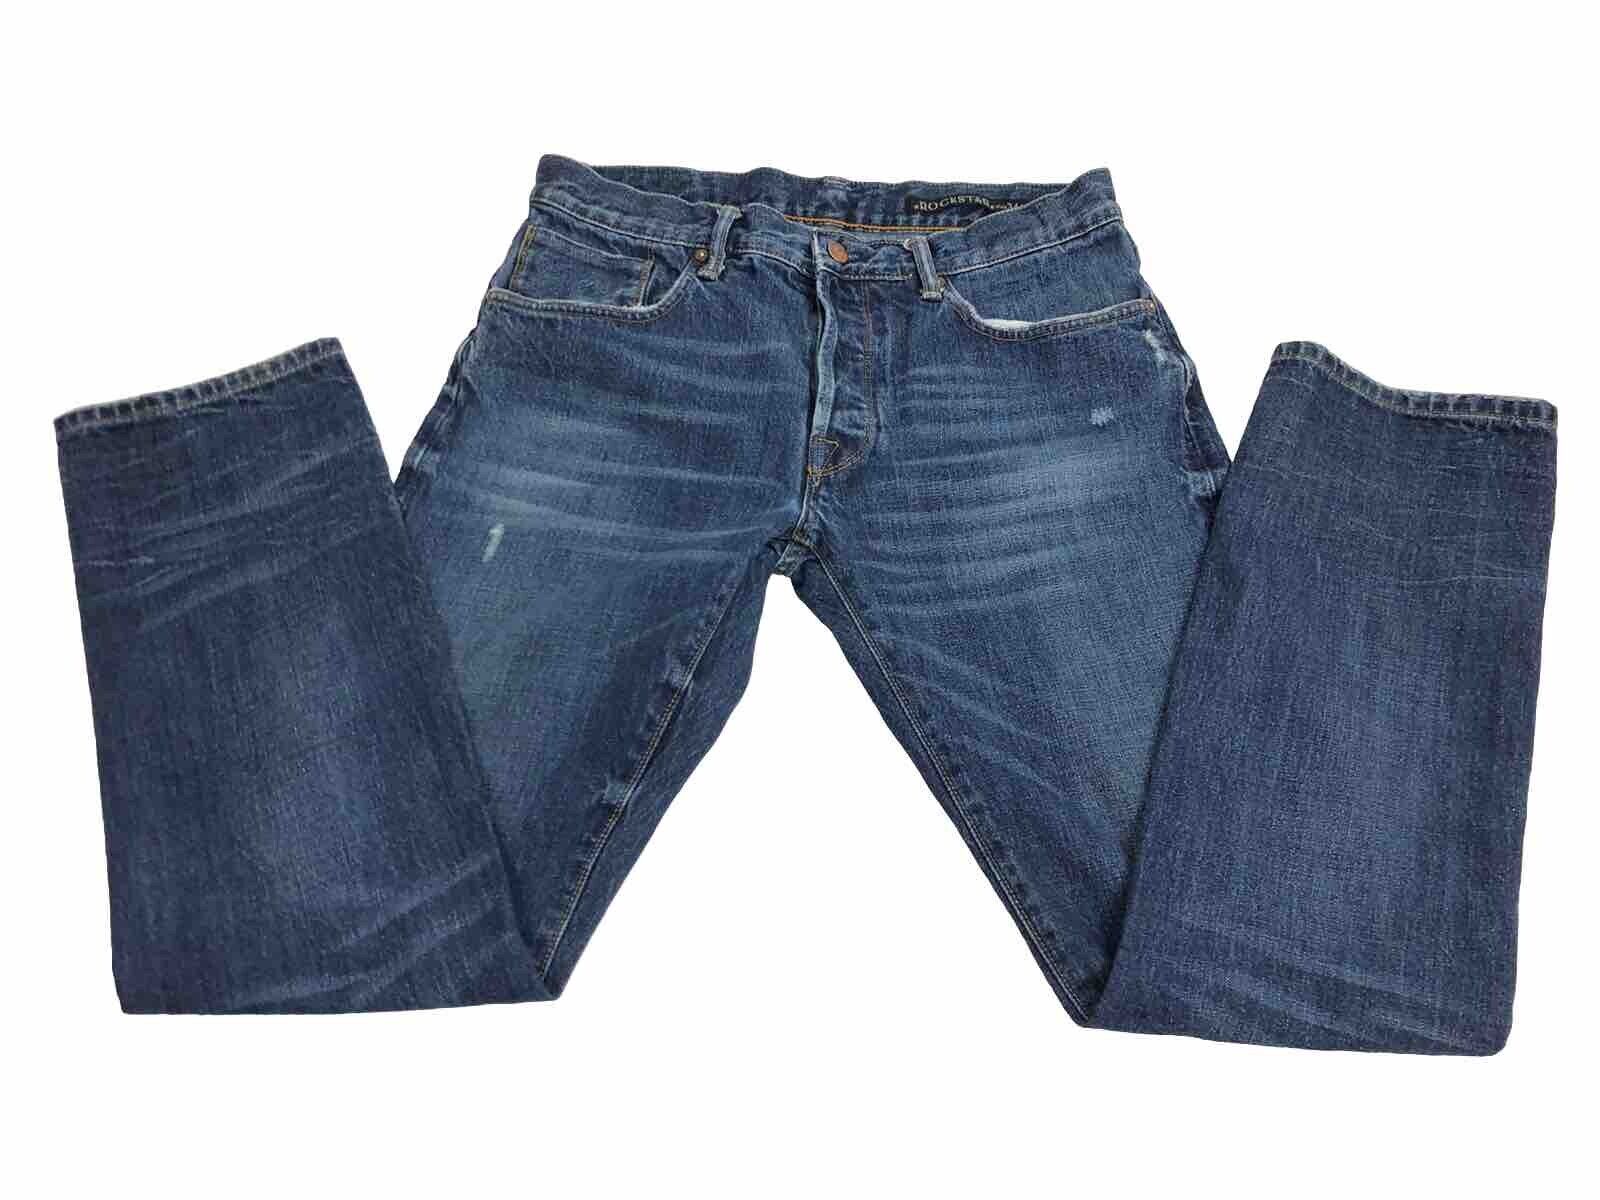 Rockstar Men's Jeans Size 34x32 Denim Blue Cotton Distressed Button Fly